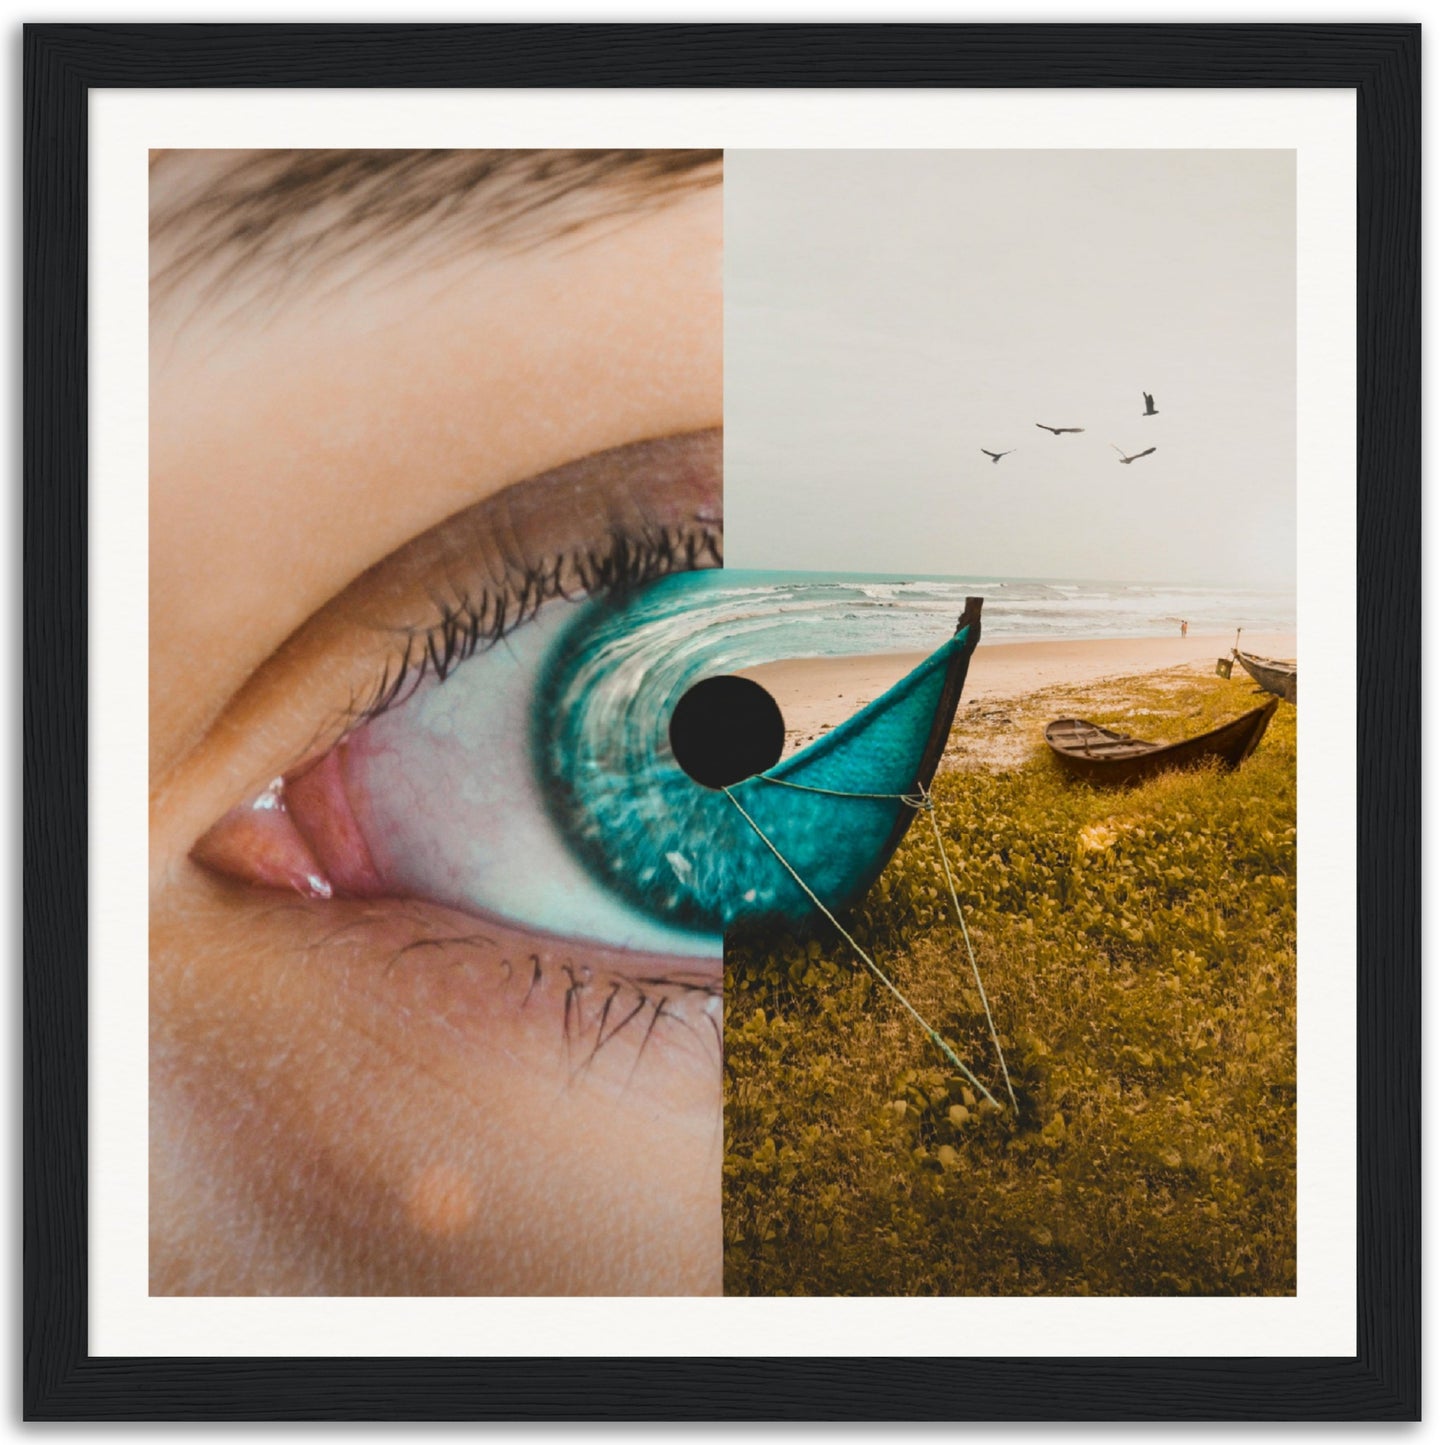 Seas-eye-de - Museum-Quality Framed Art Print